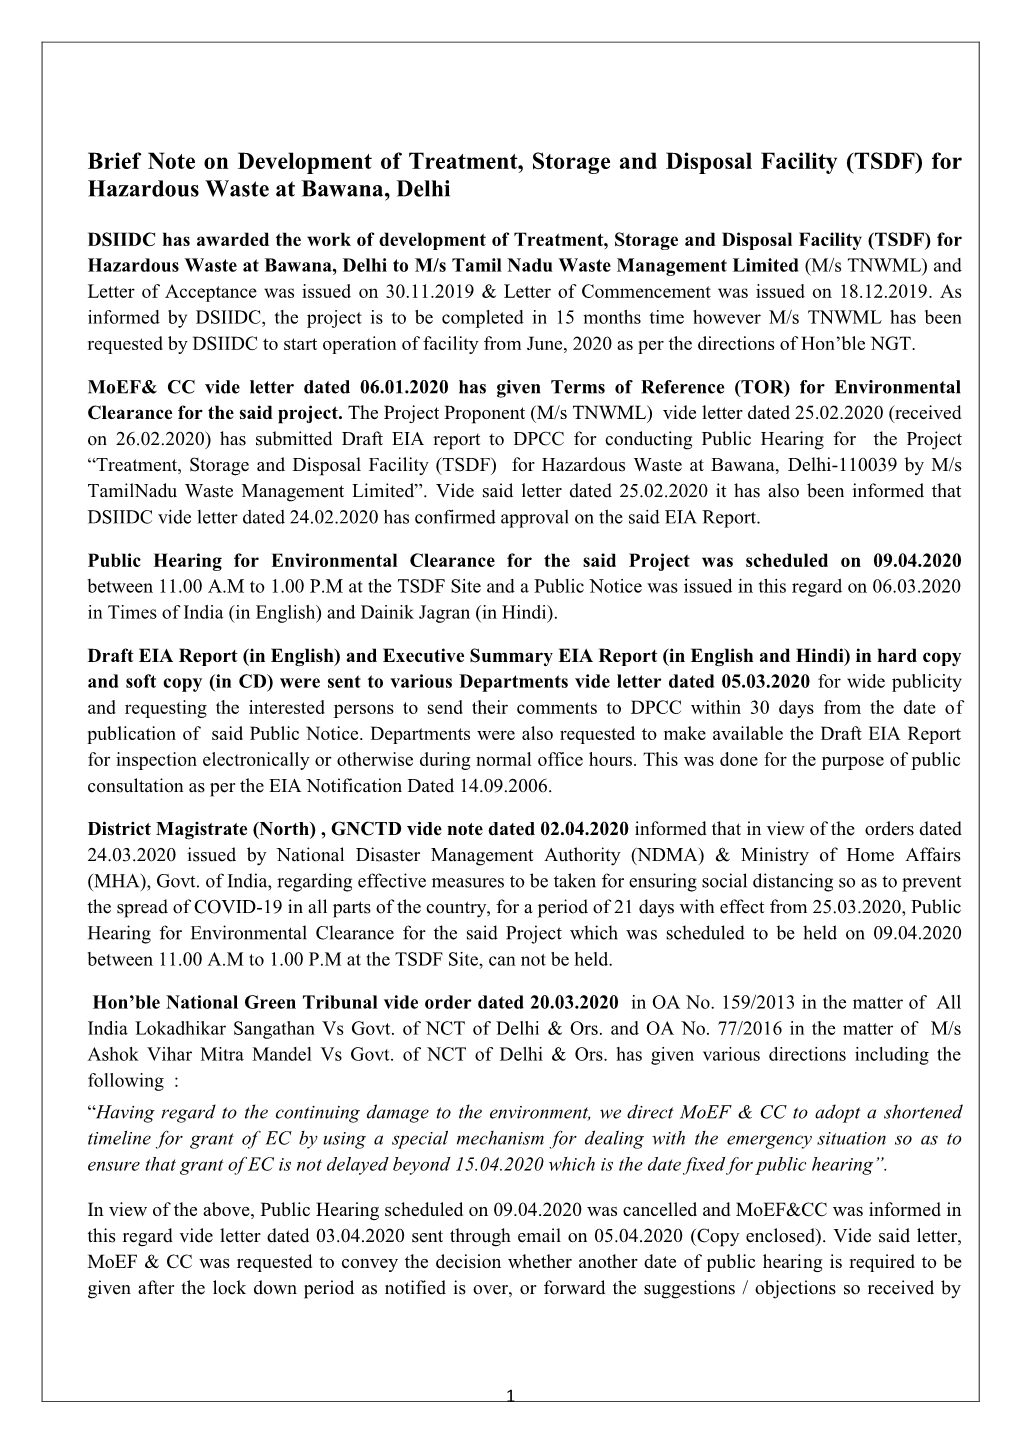 Brief Note on Development of Treatment, Storage and Disposal Facility (TSDF) for Hazardous Waste at Bawana, Delhi